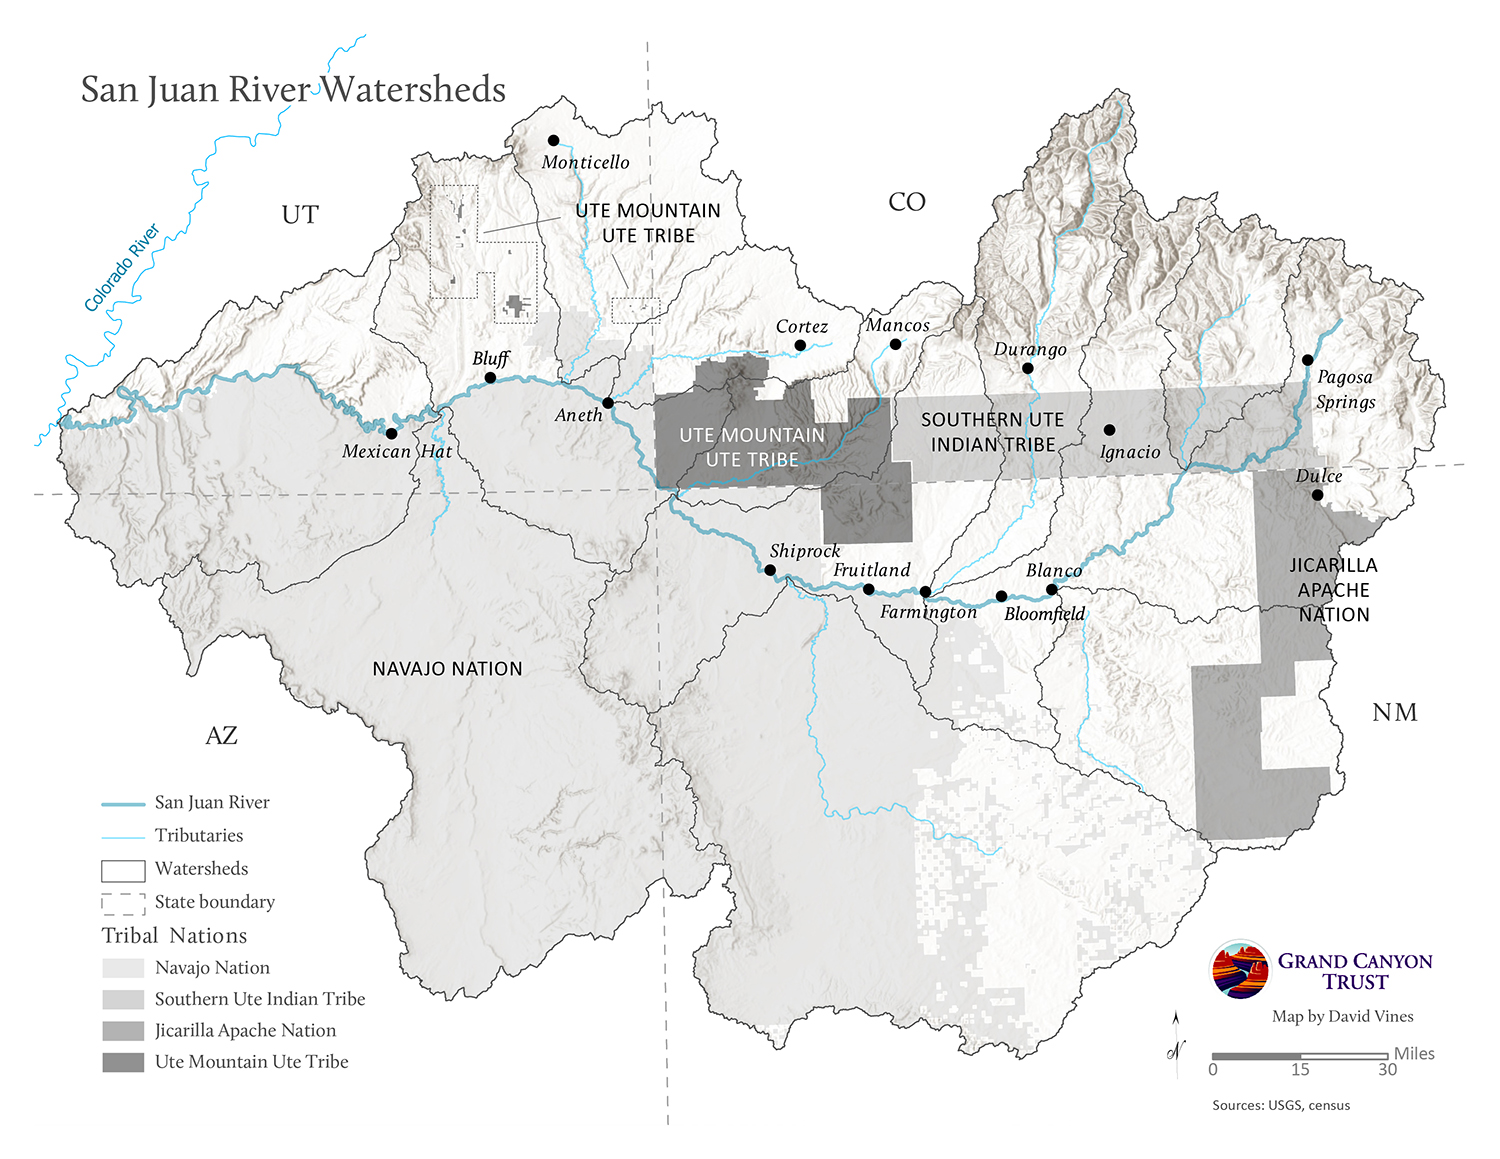 Map of watersheds influencing the San Juan River